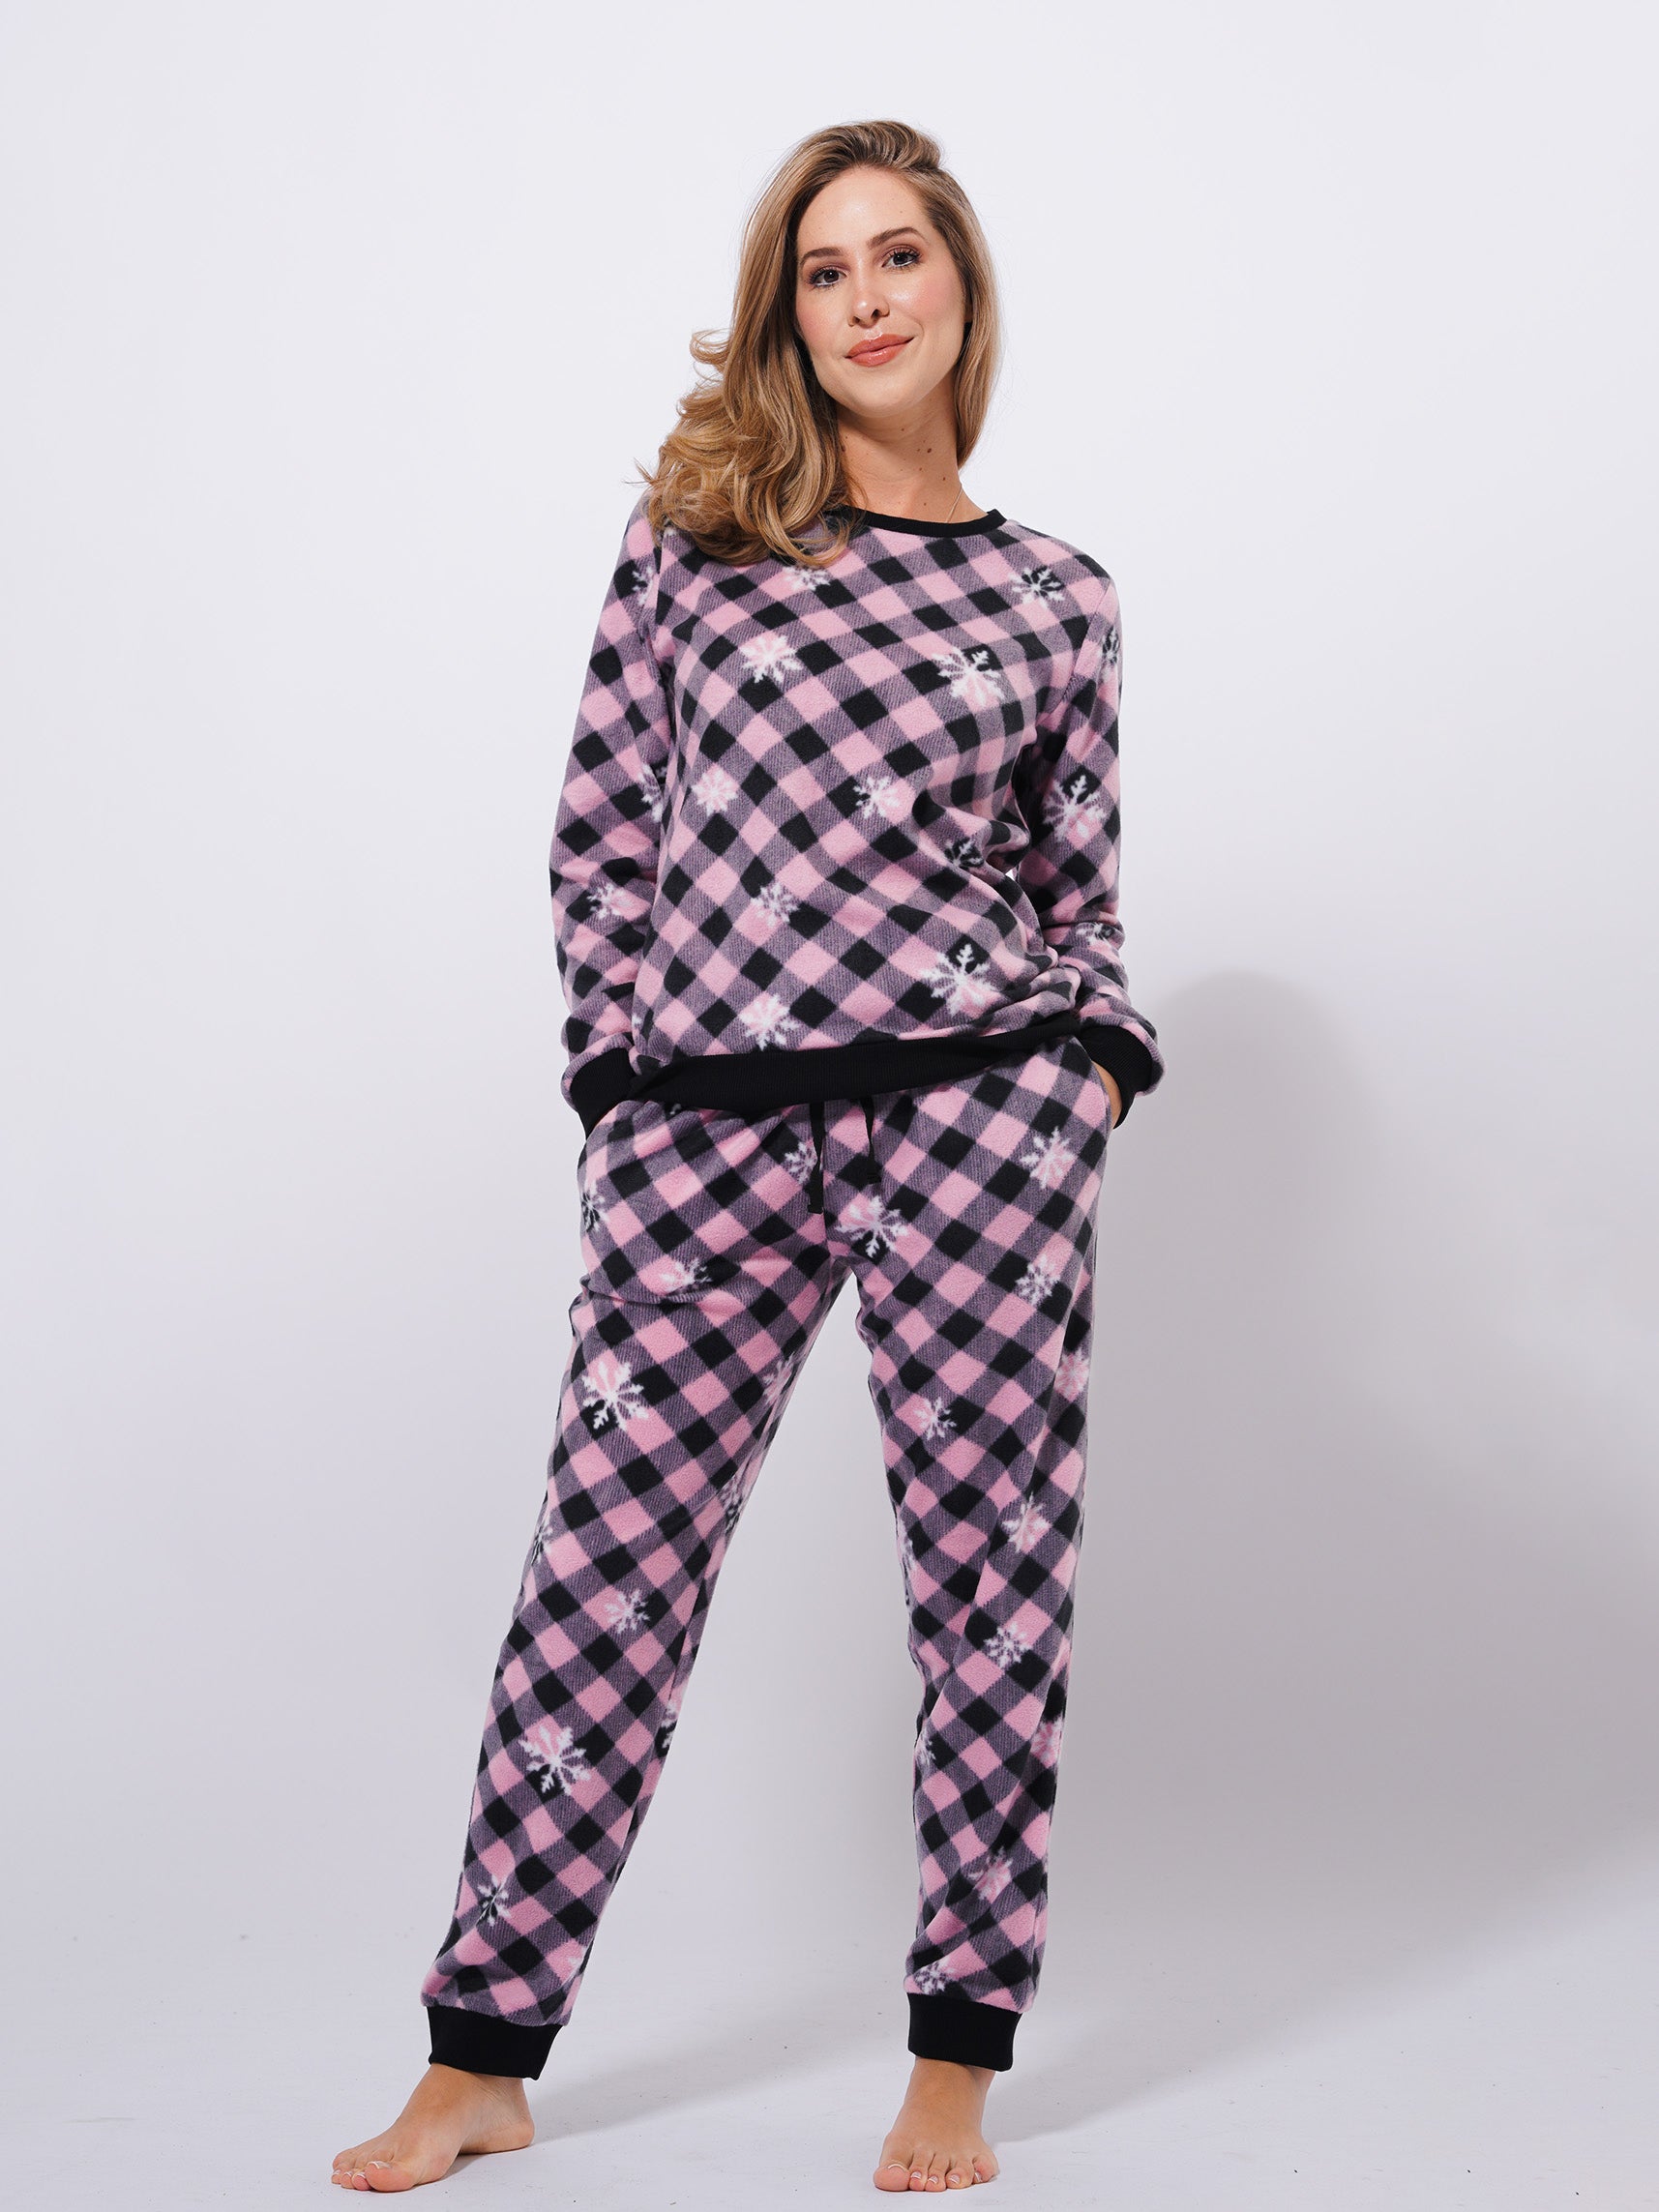 Classy Check Women Christmas Wear Pyjama Set - inteblu